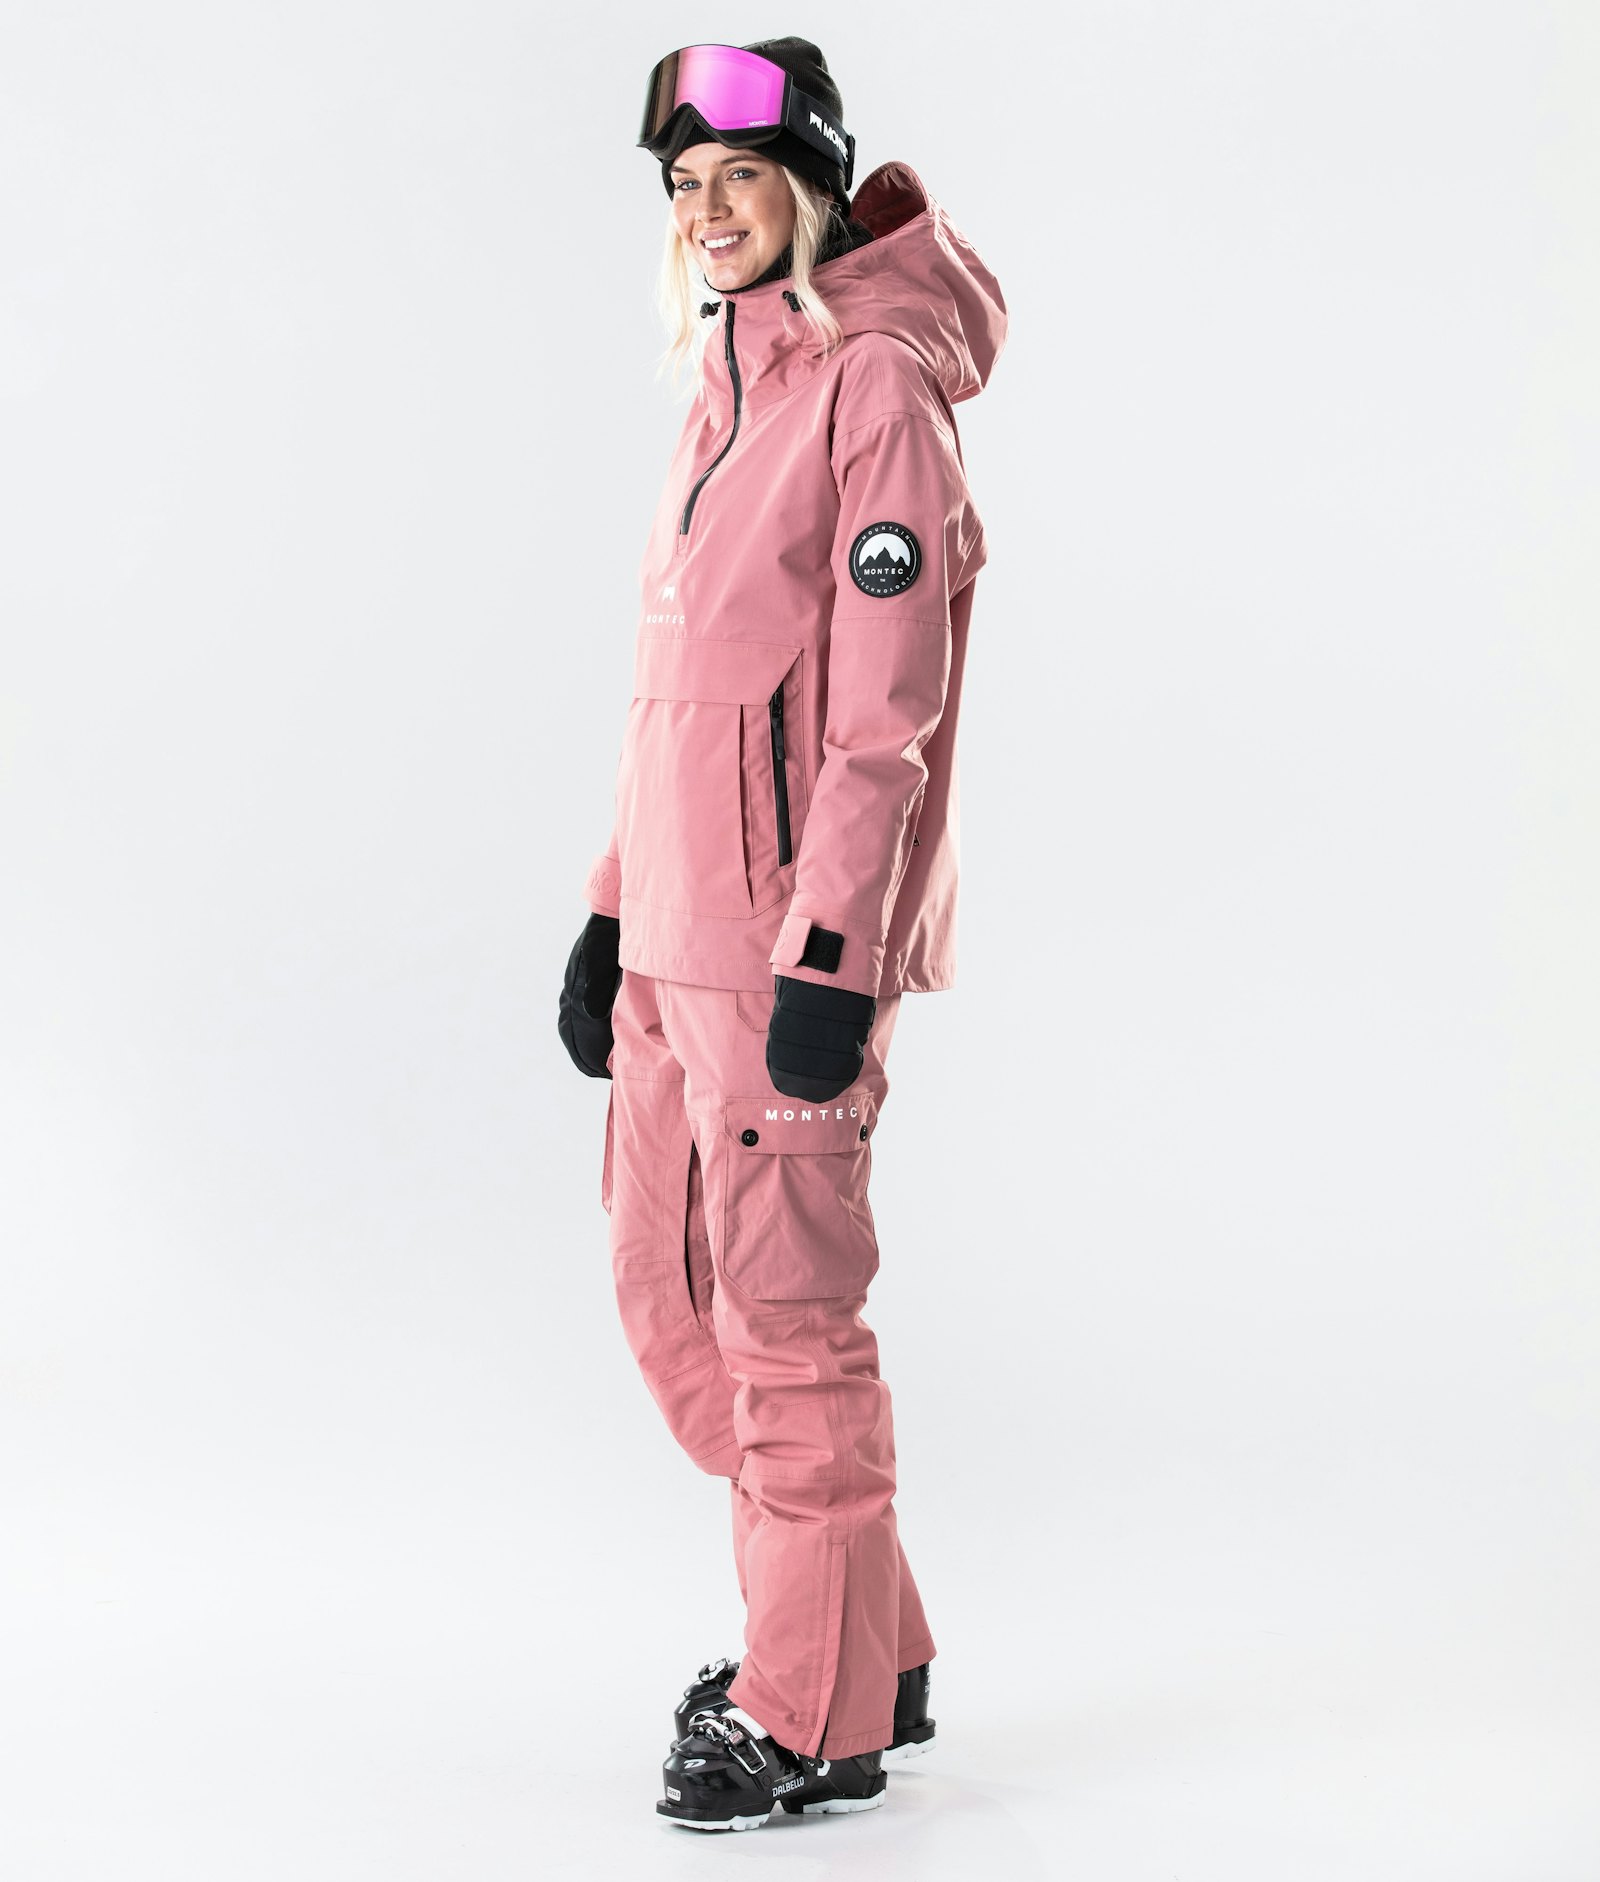 Montec Typhoon W 2020 Skijakke Dame Pink